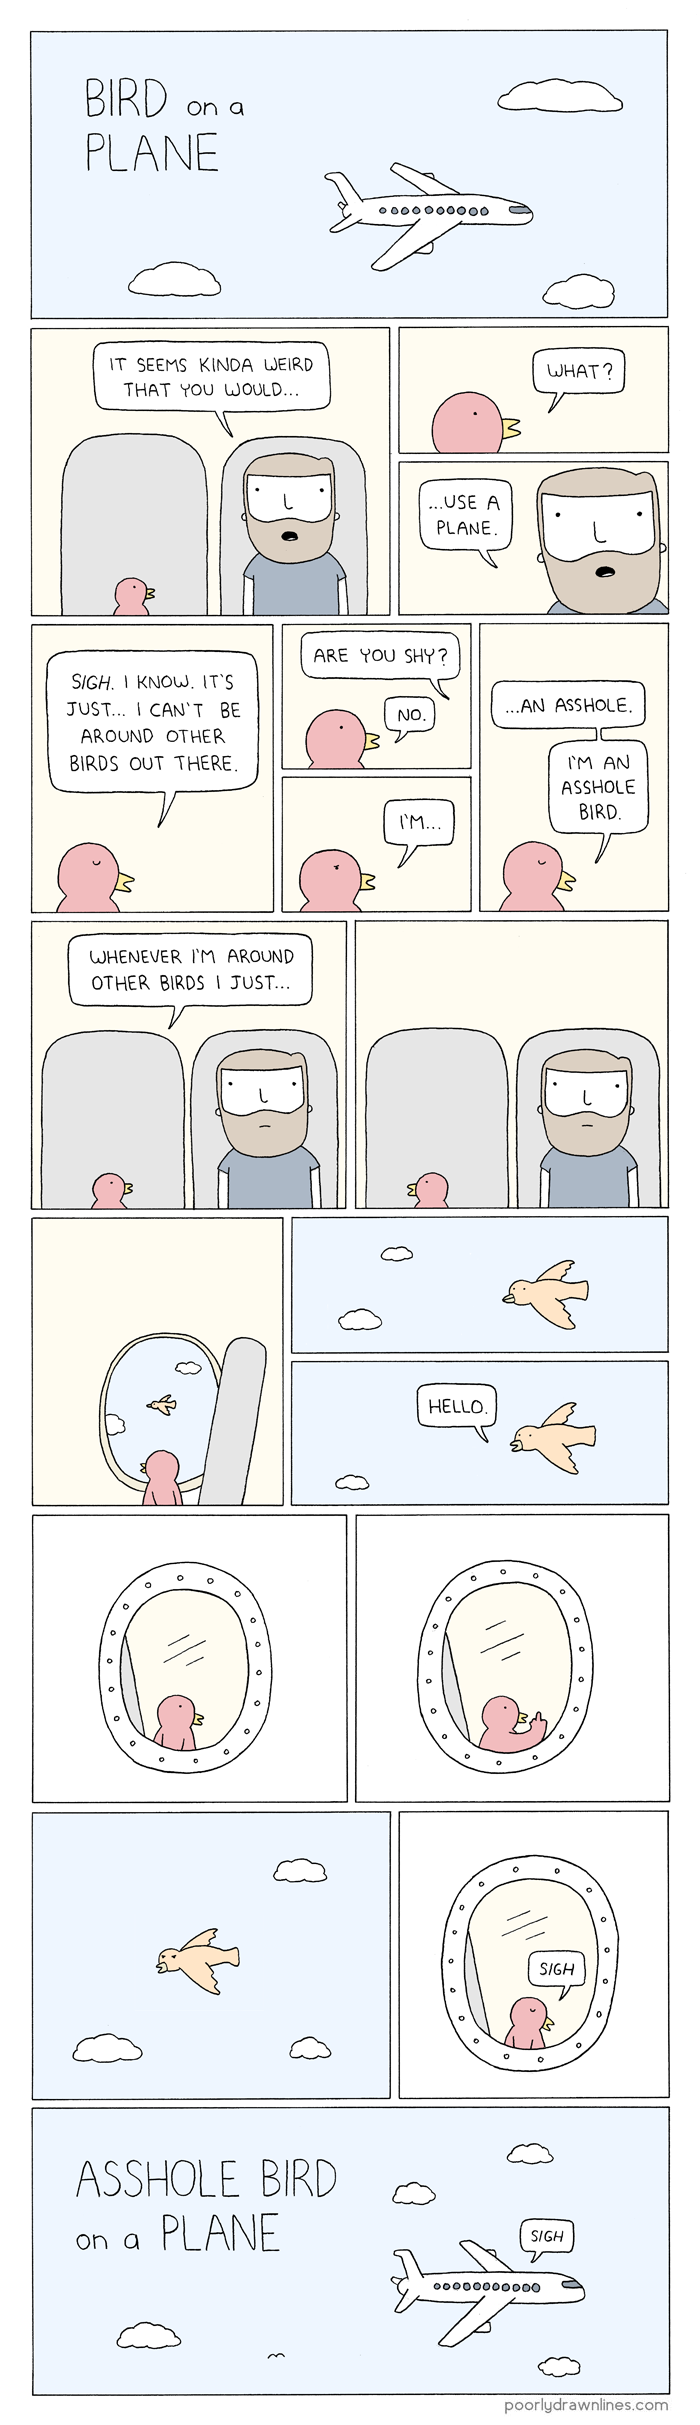 bird-on-plane